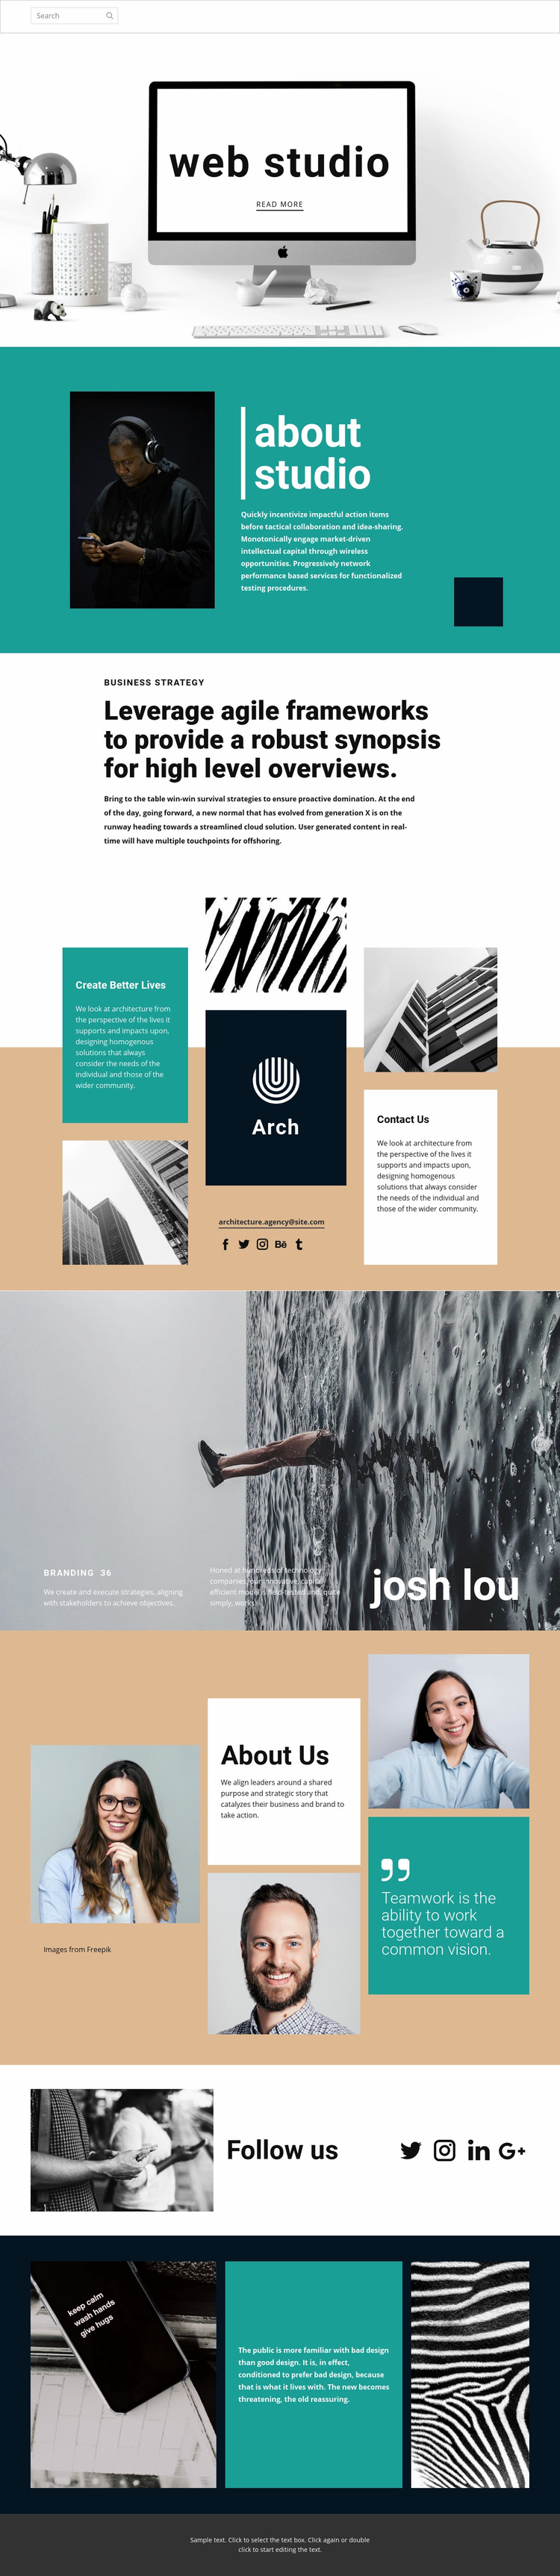 Web design studio of art Web Page Design